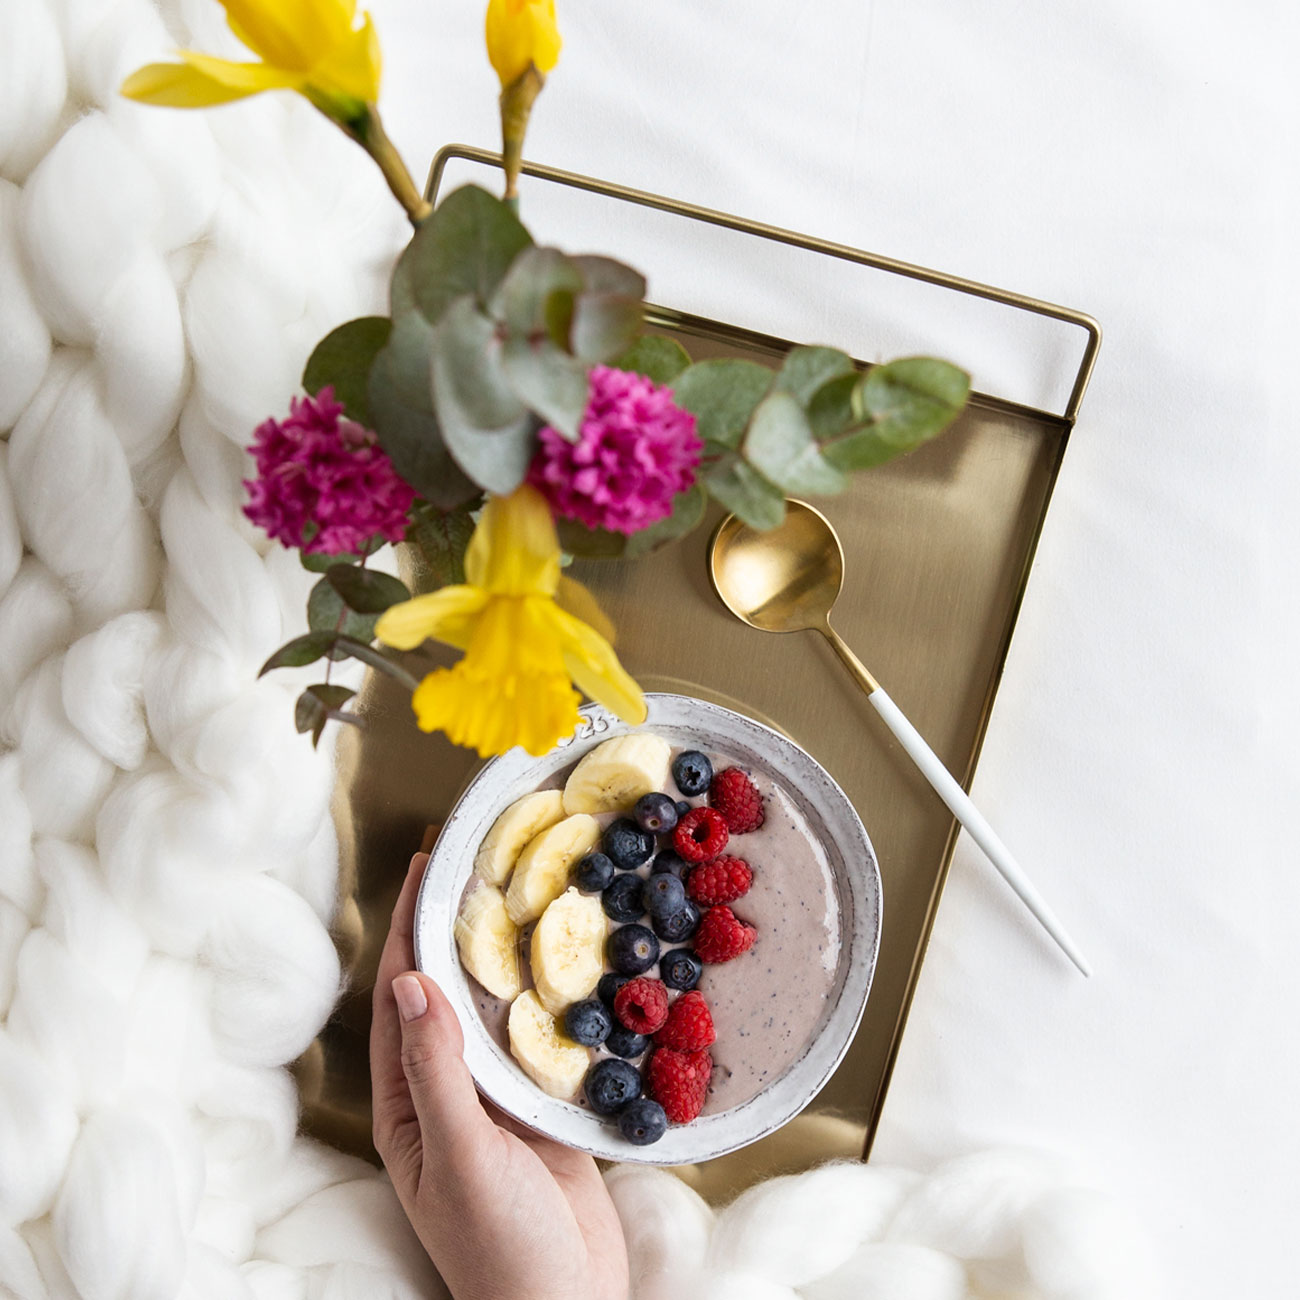 Healthy breakfast banana and berries bowl in bed